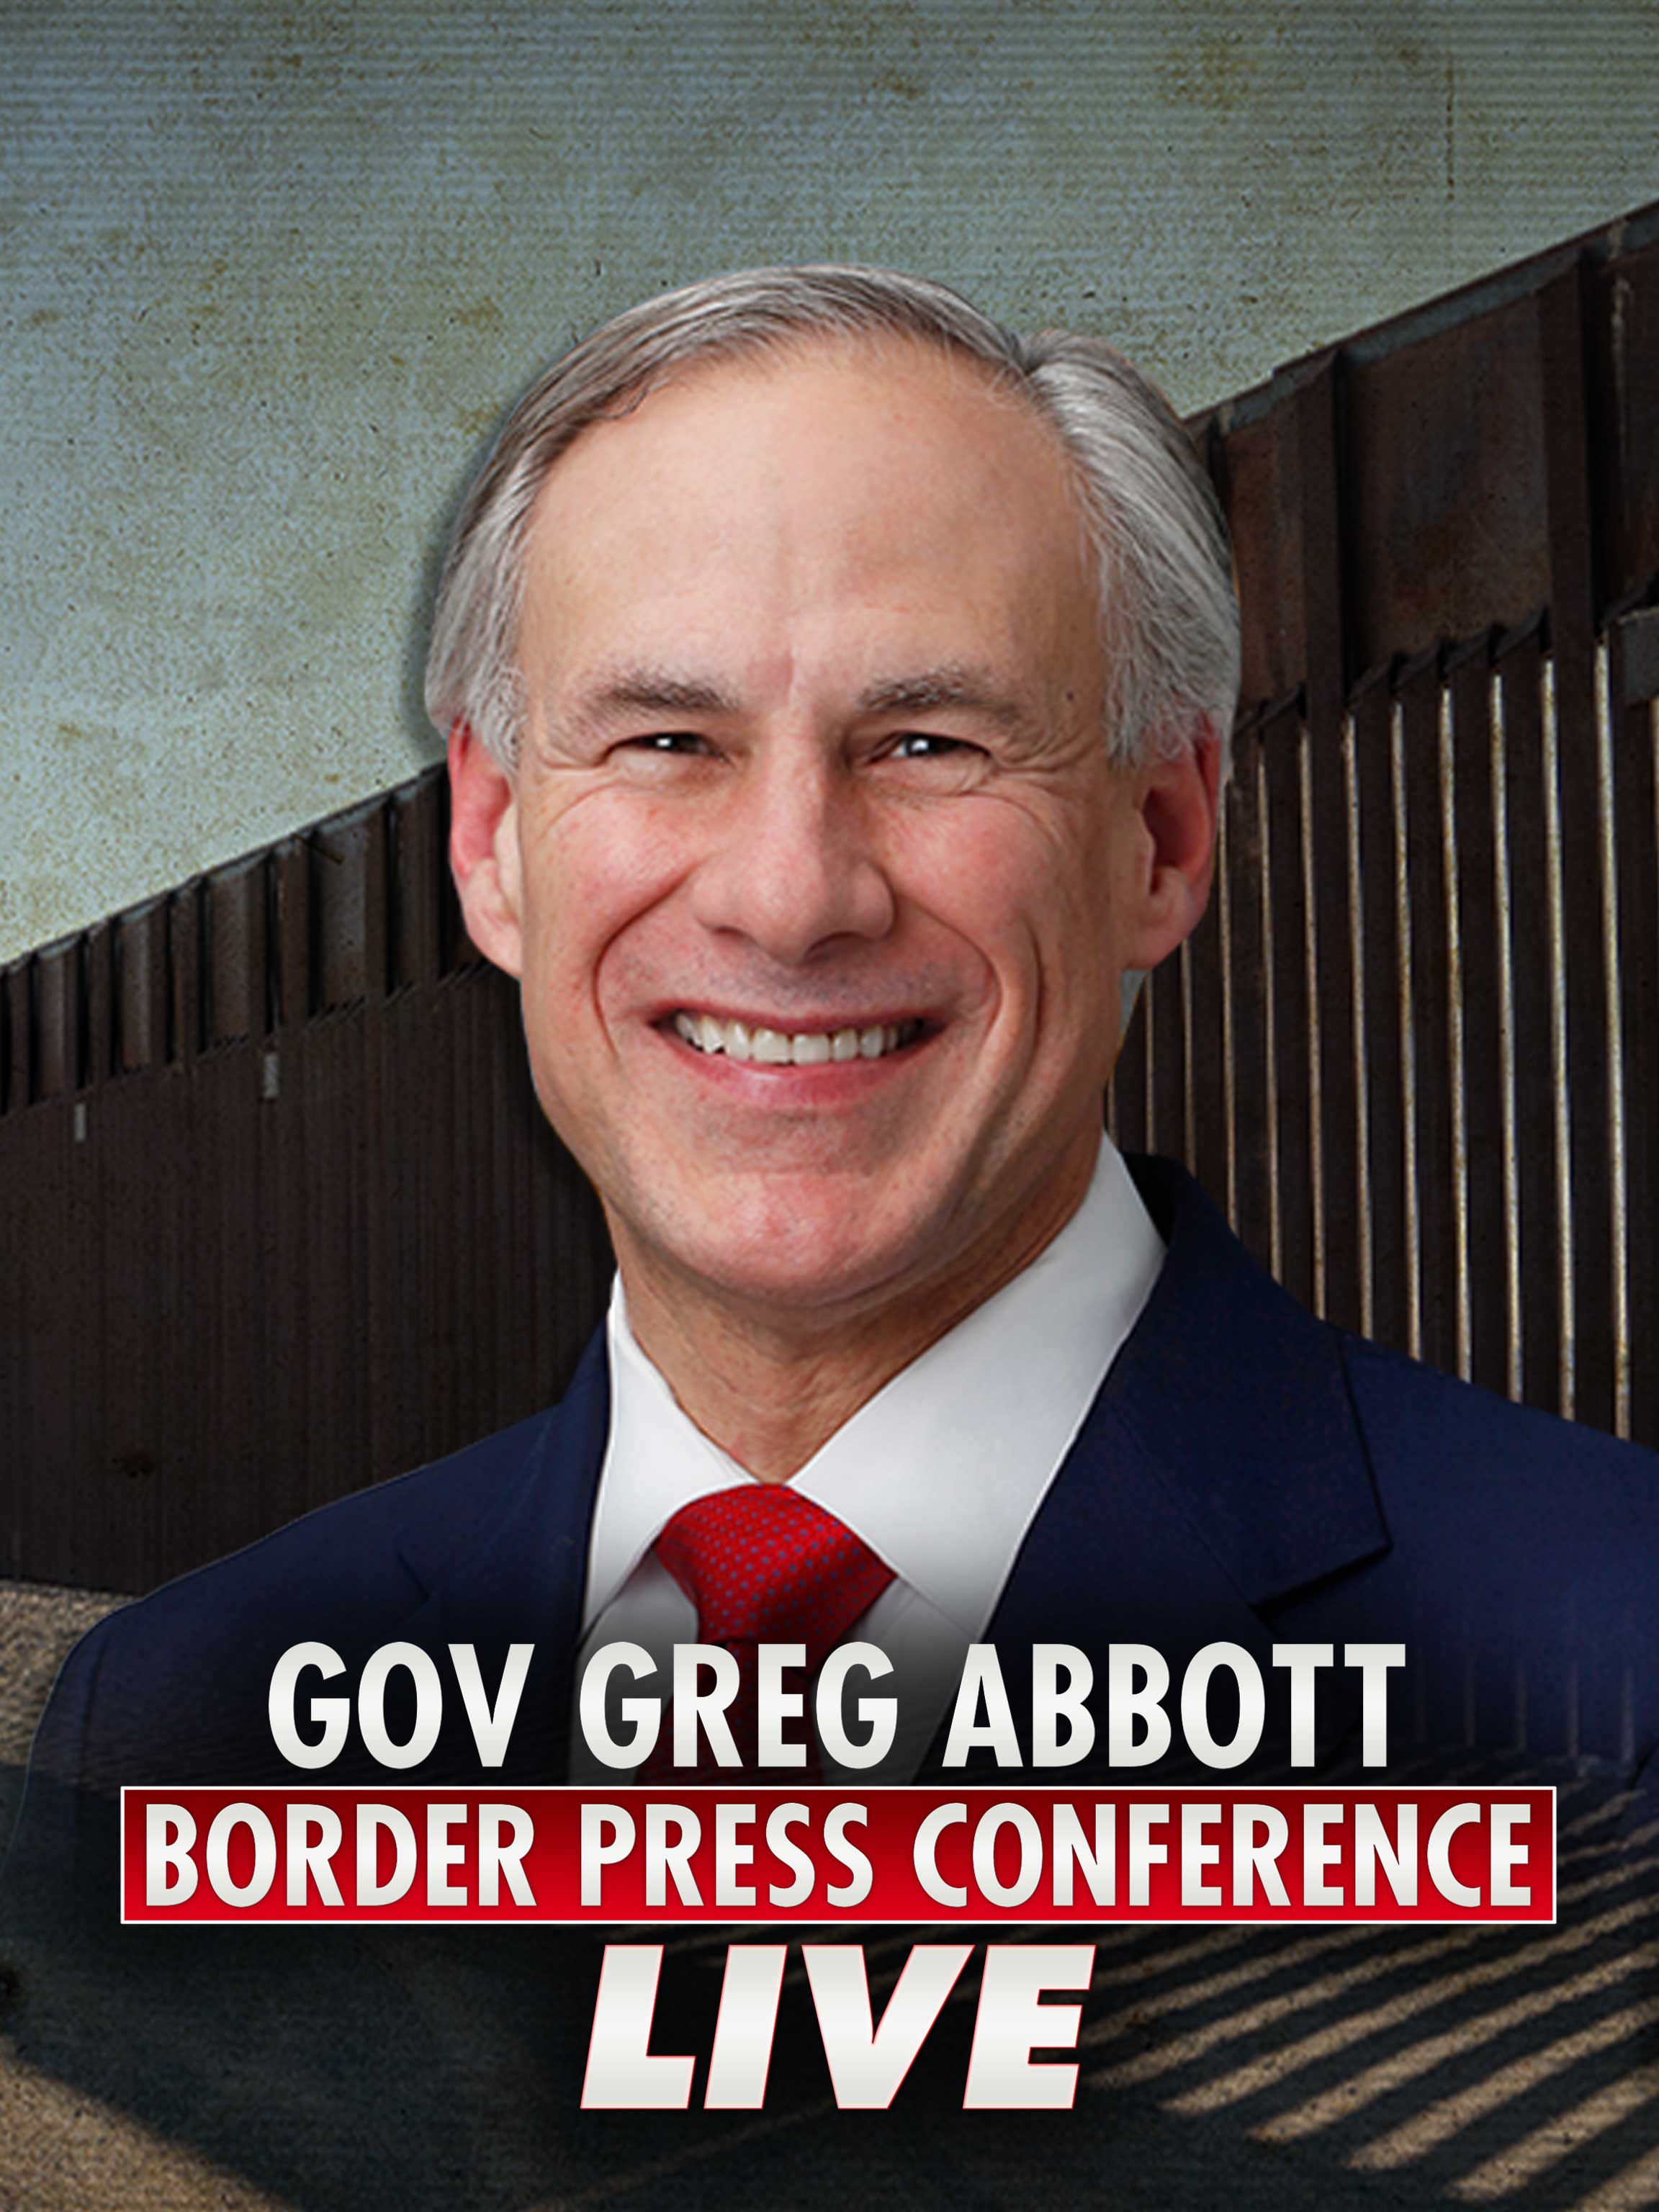 Border Press Conference Live dcg-mark-poster